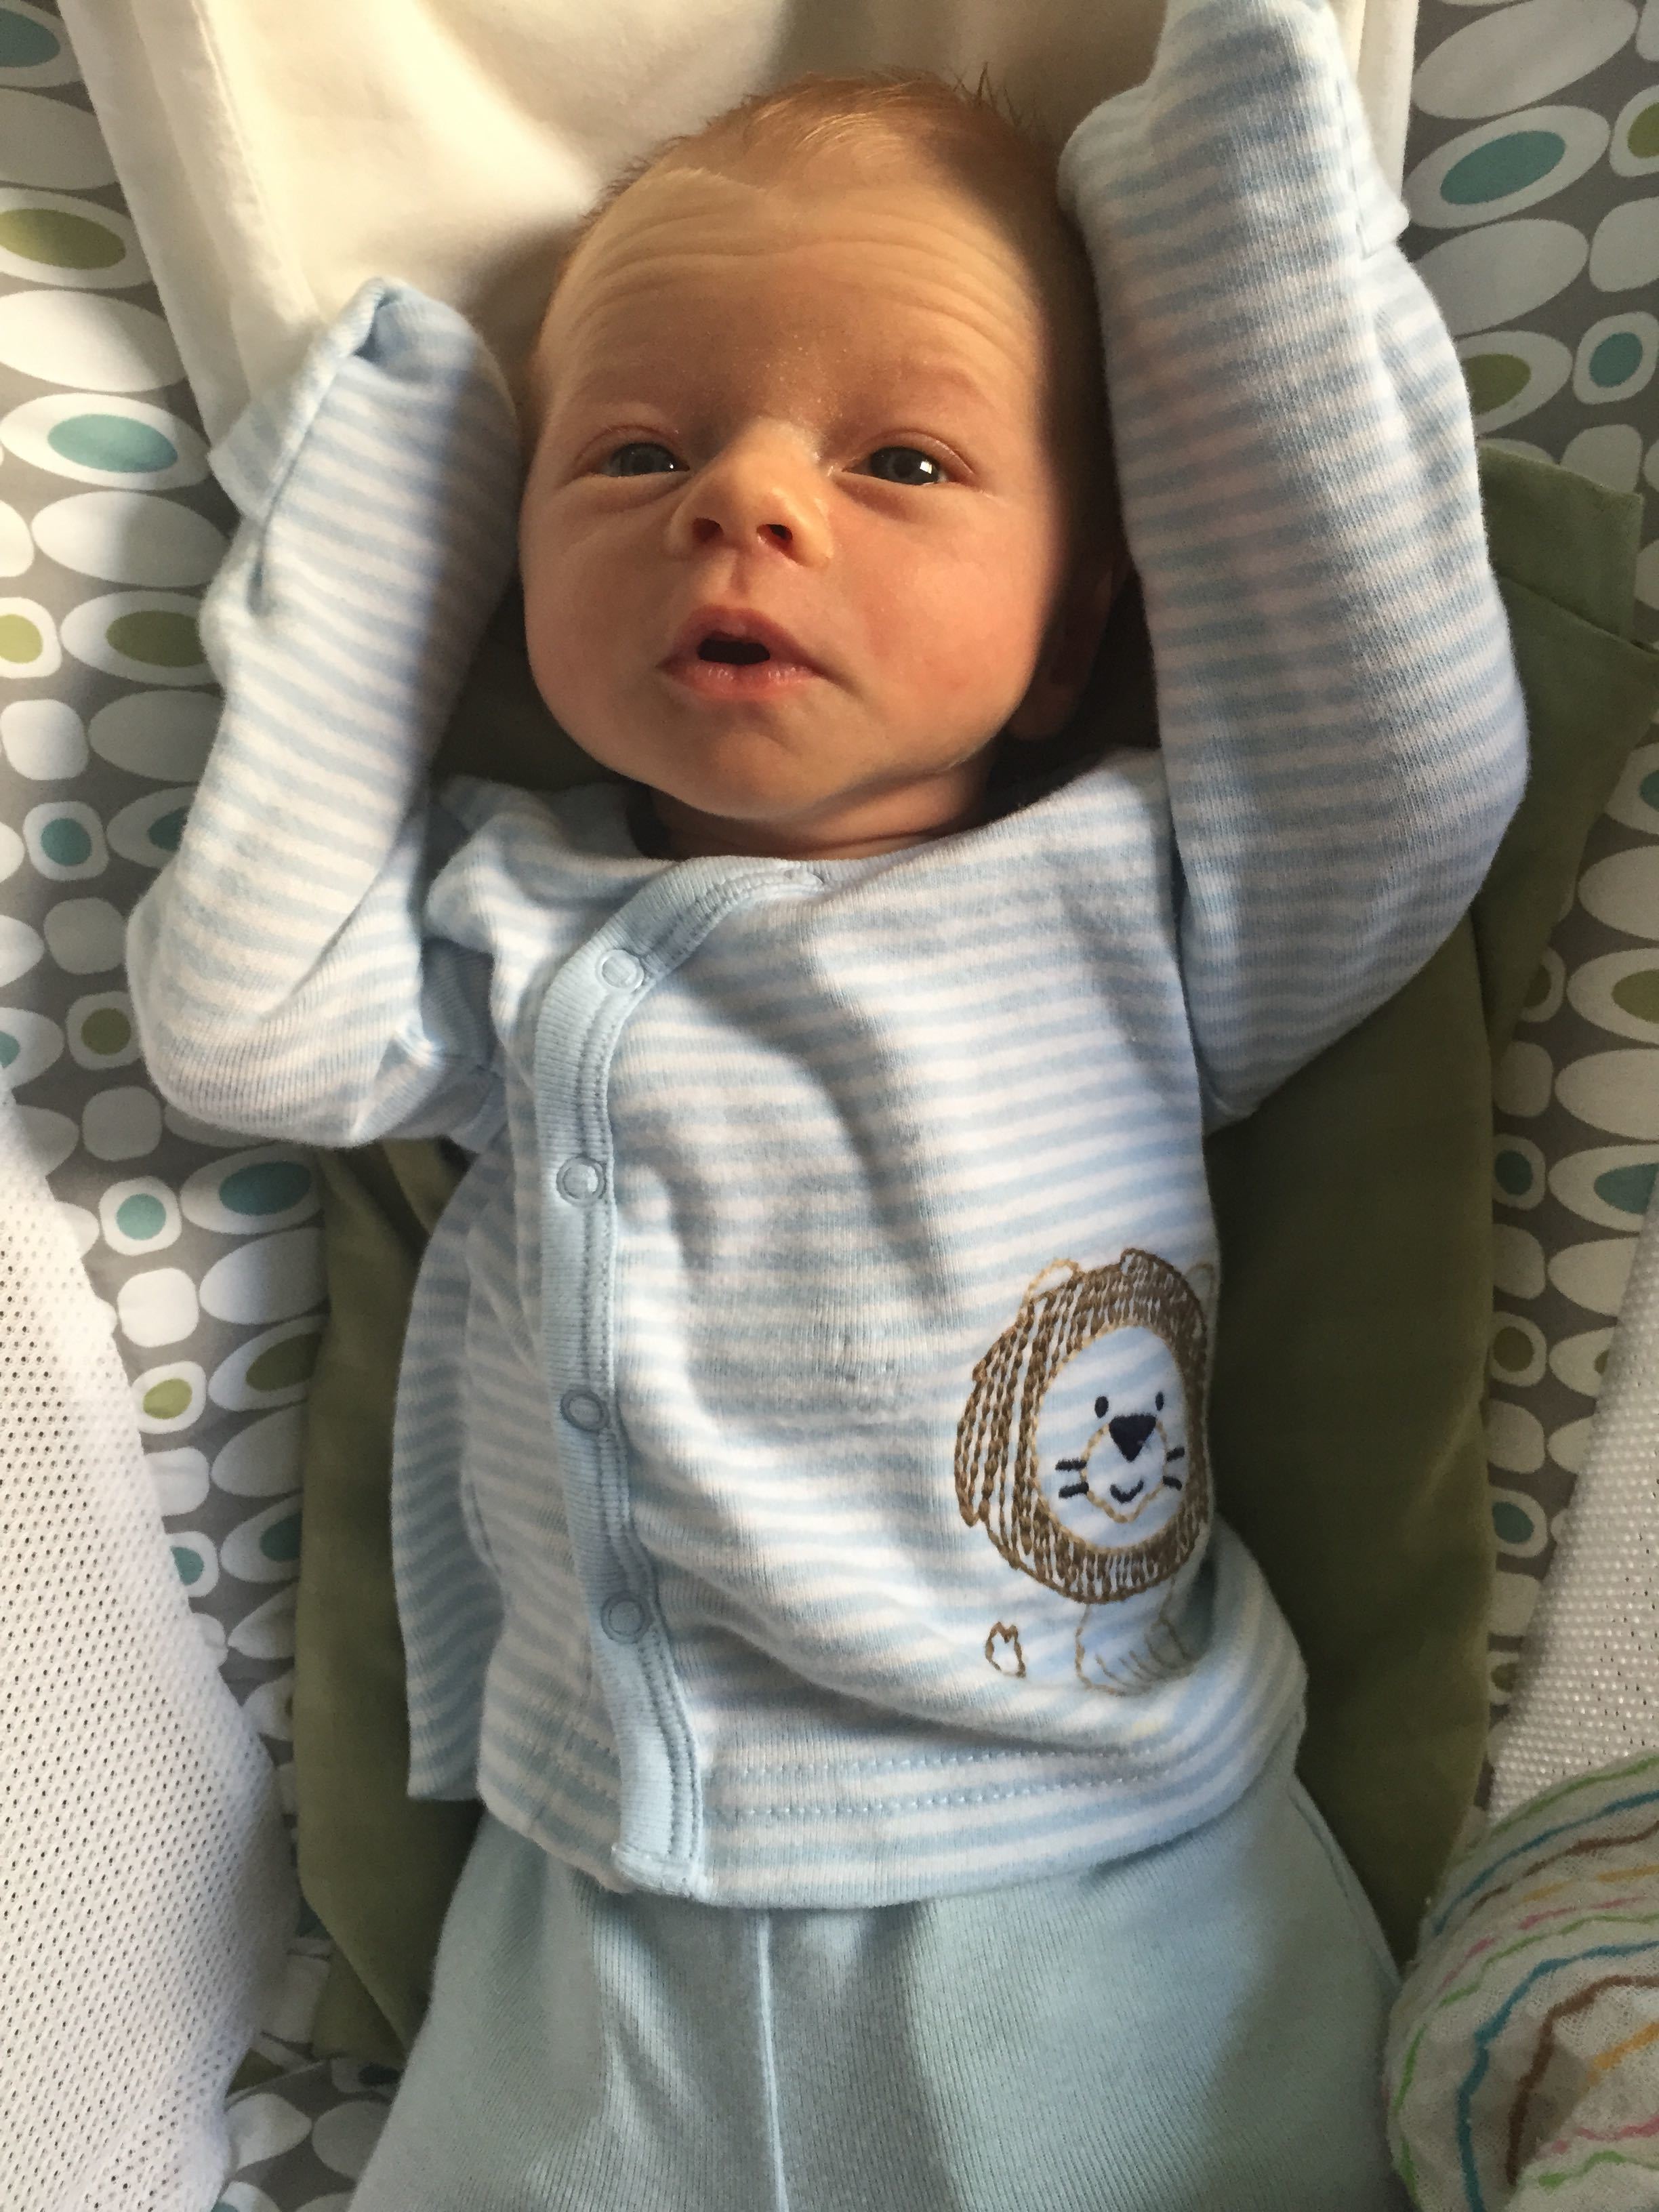 Newborn Baby in pajamas